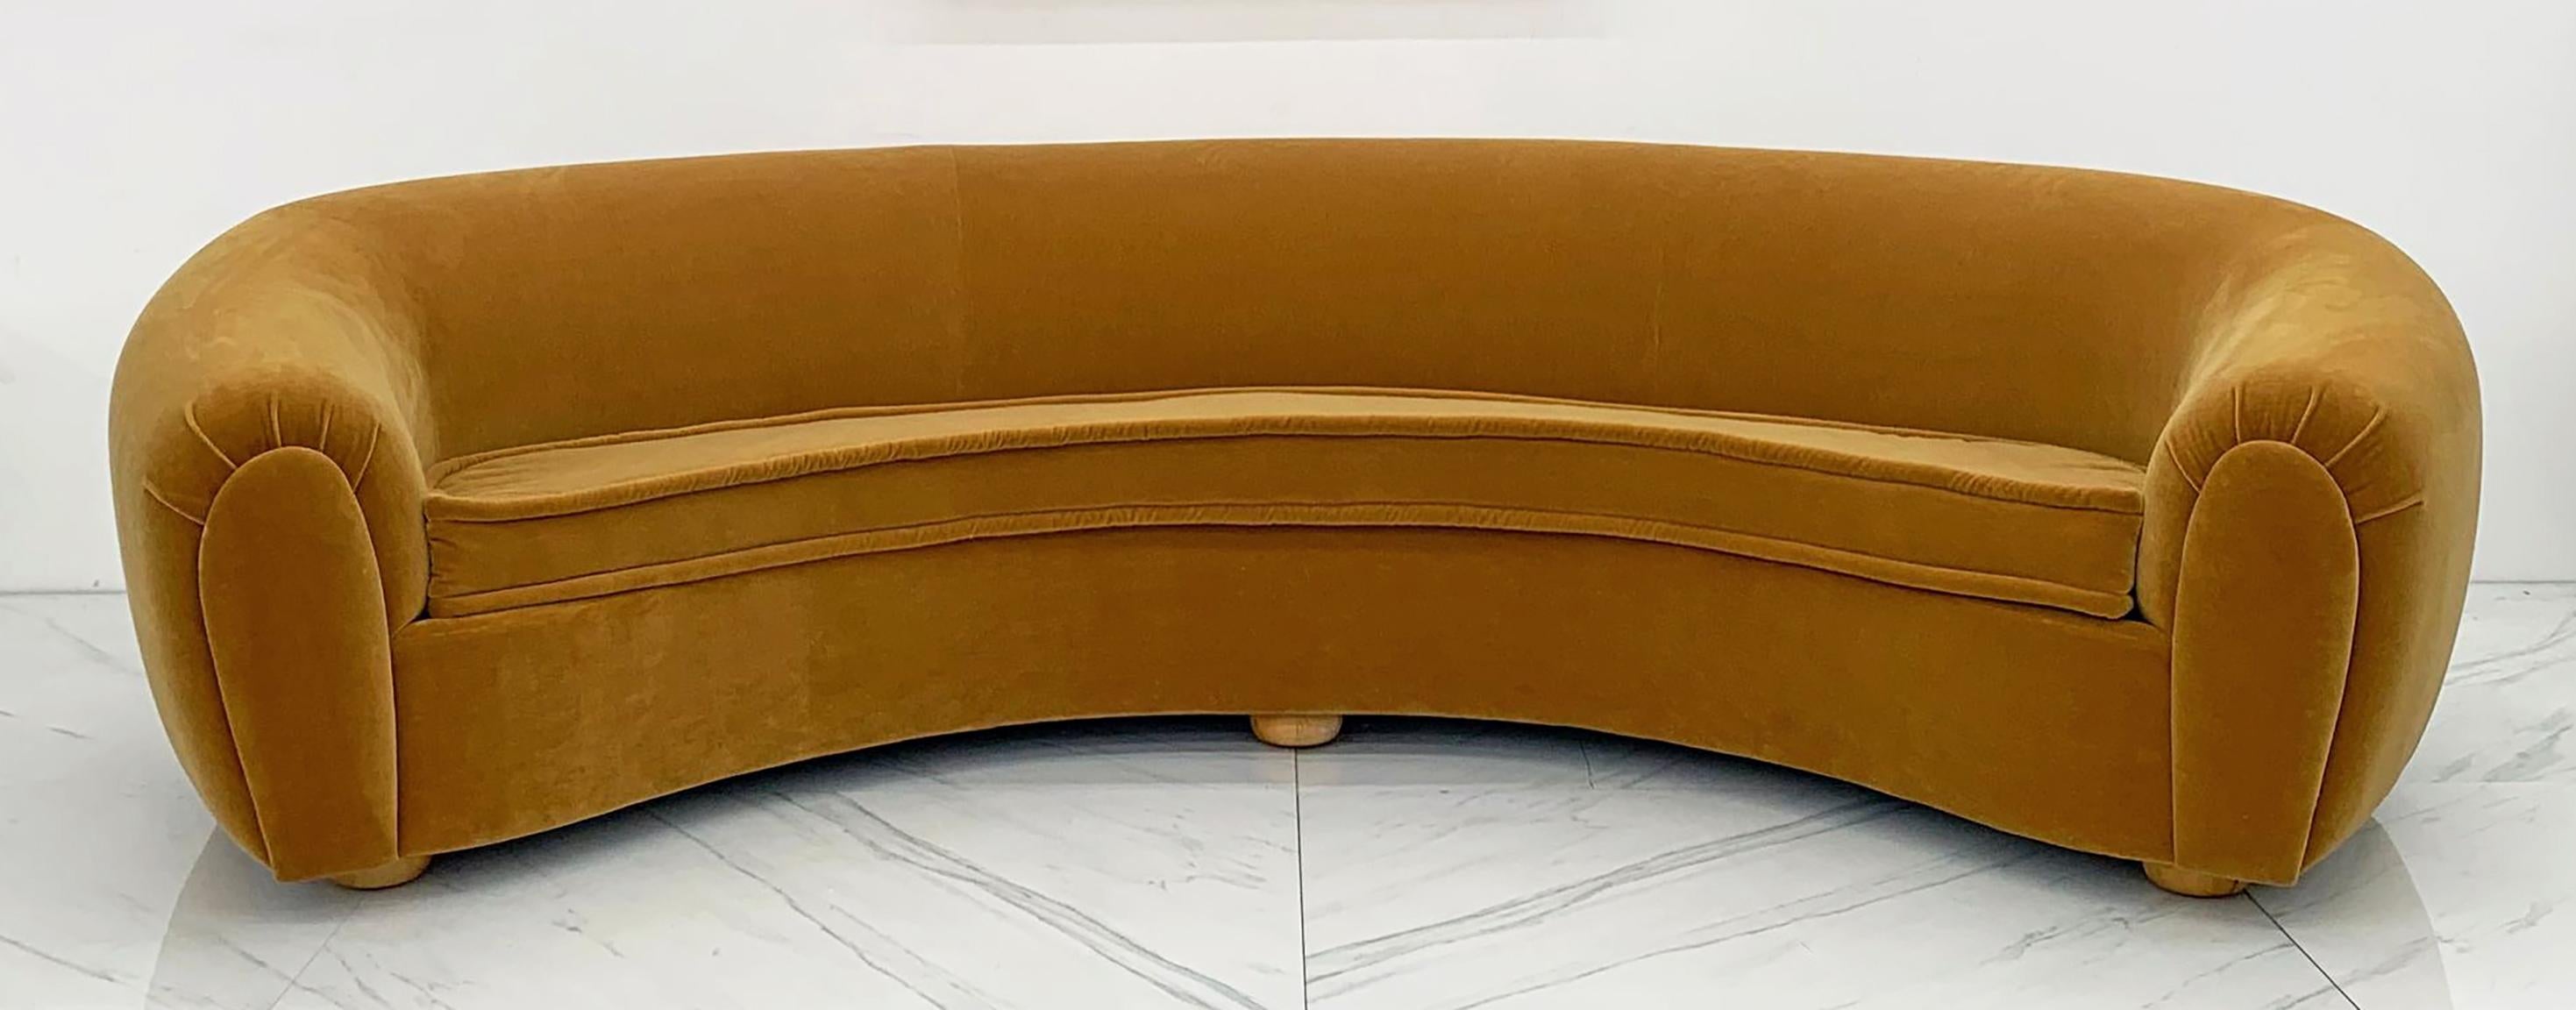 curved vintage sofa